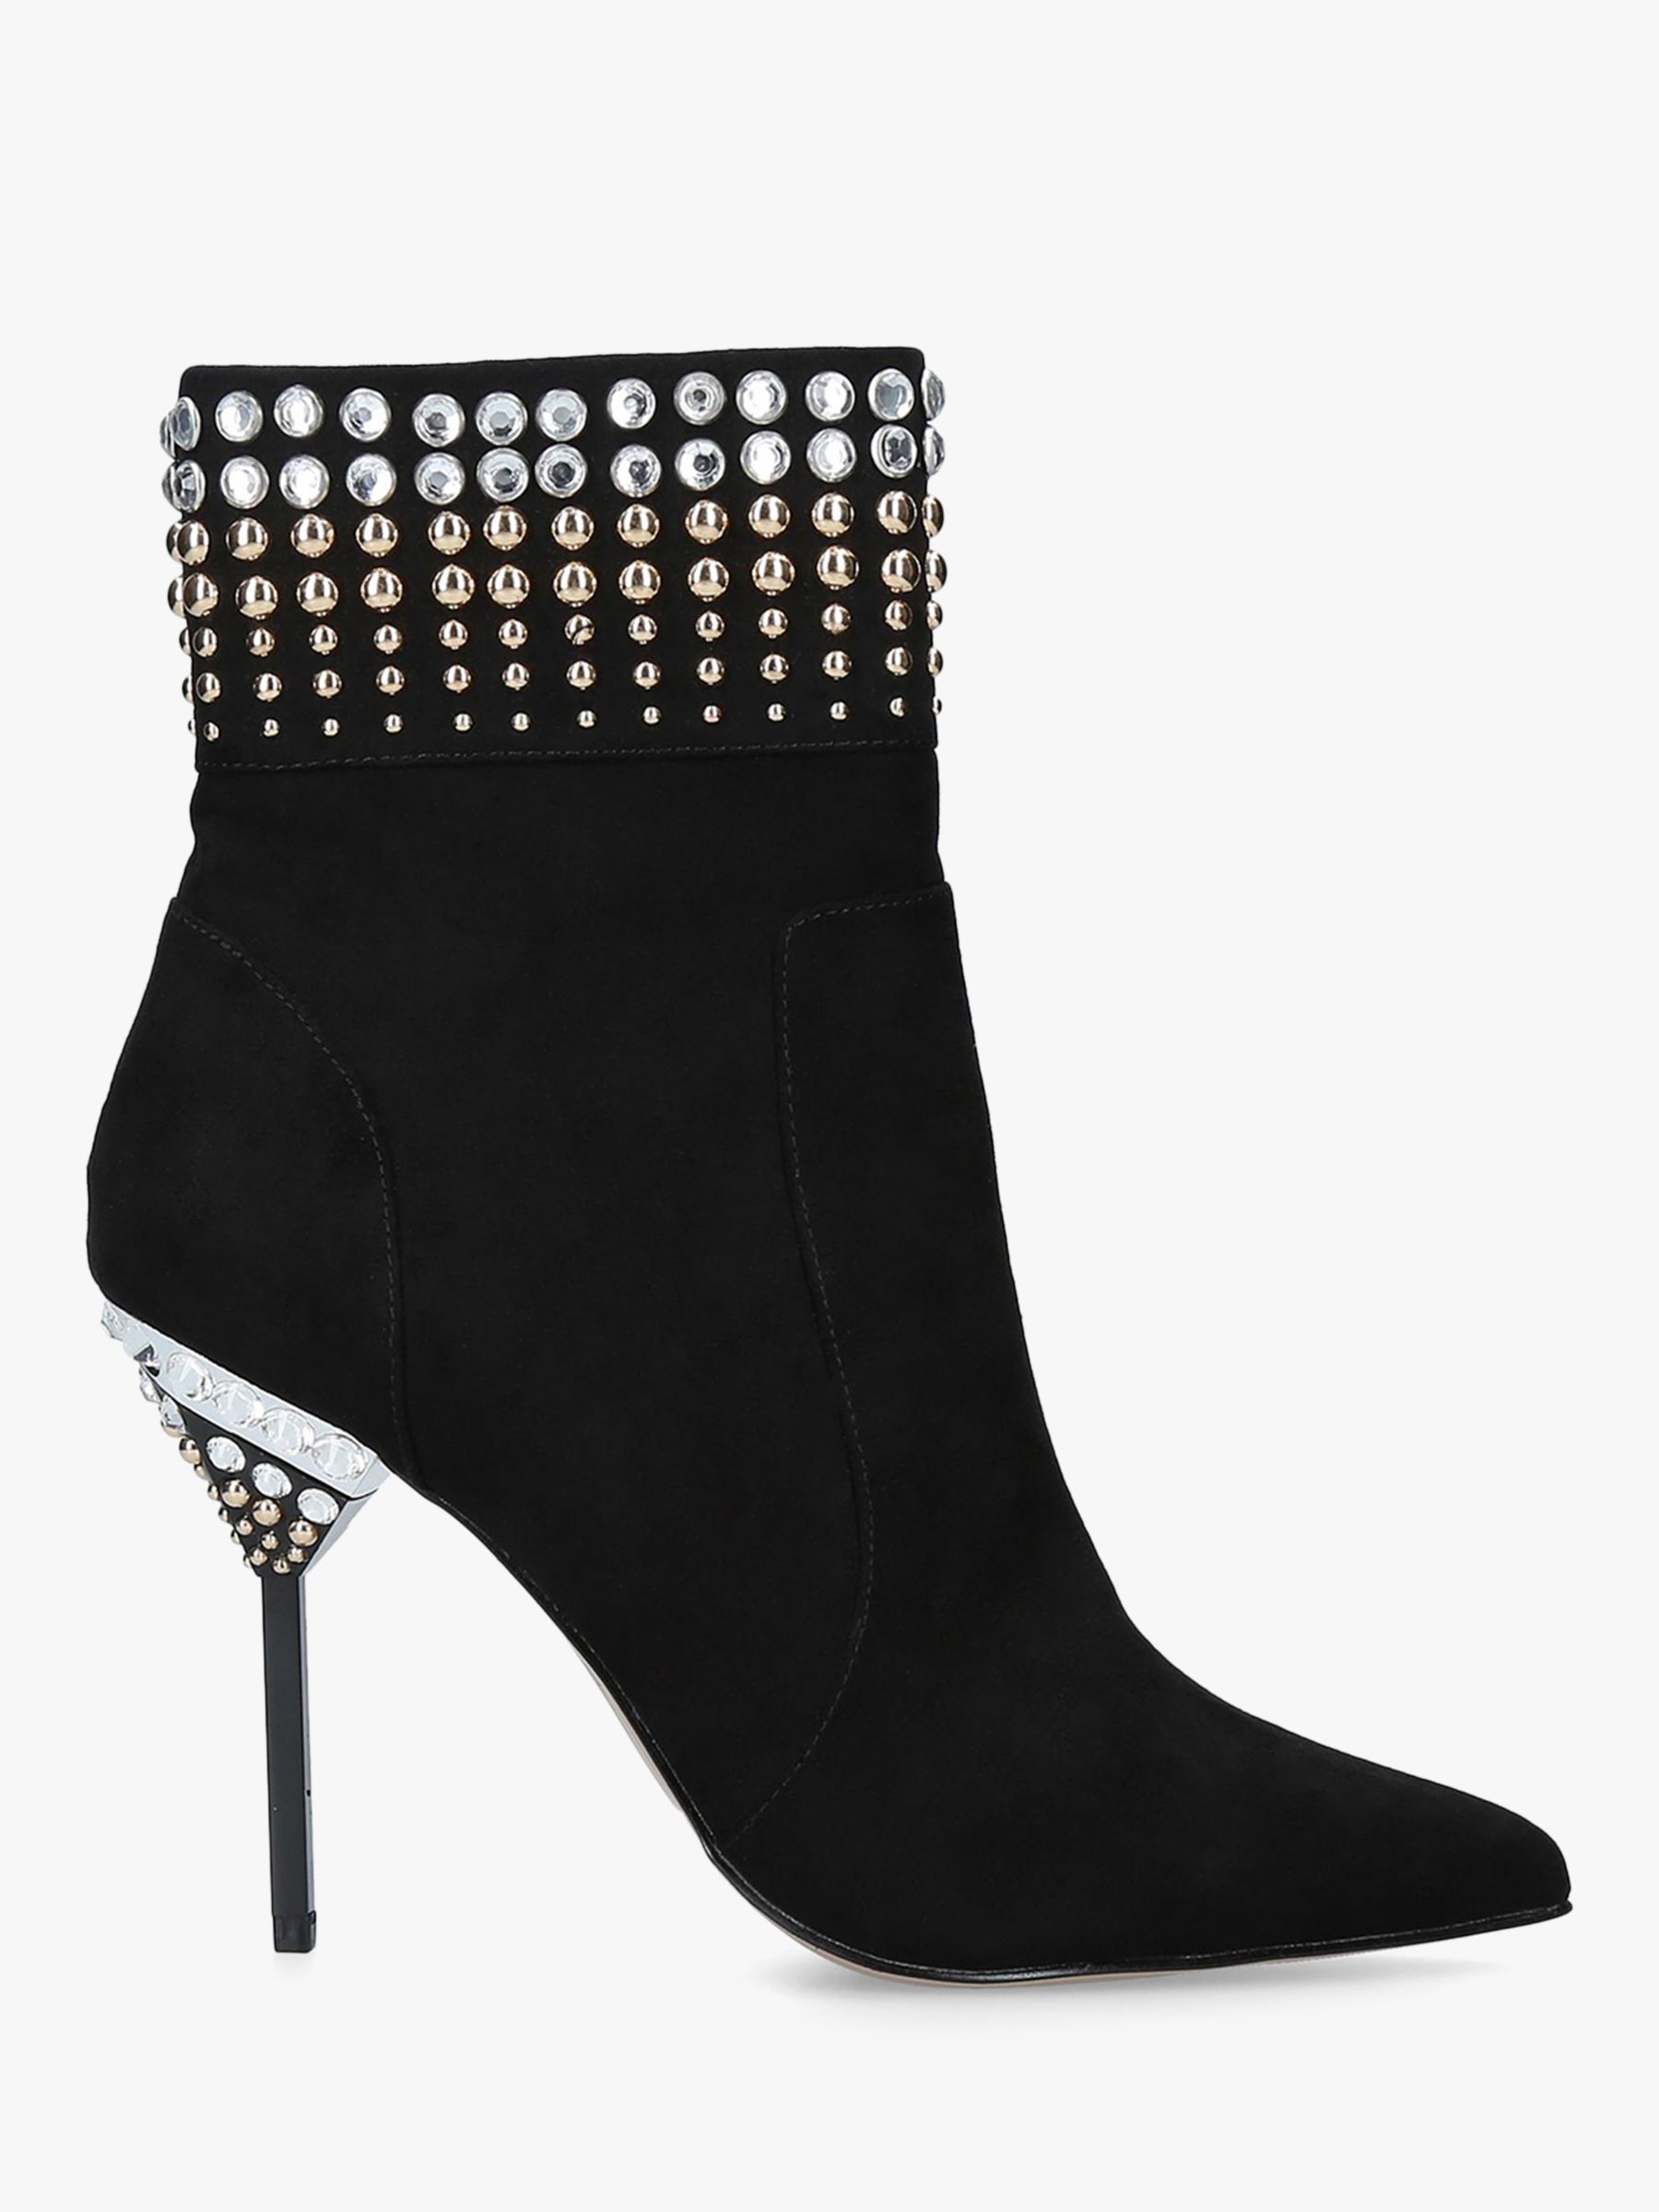 Carvela Gemma Stiletto Heel Ankle Boots, Black